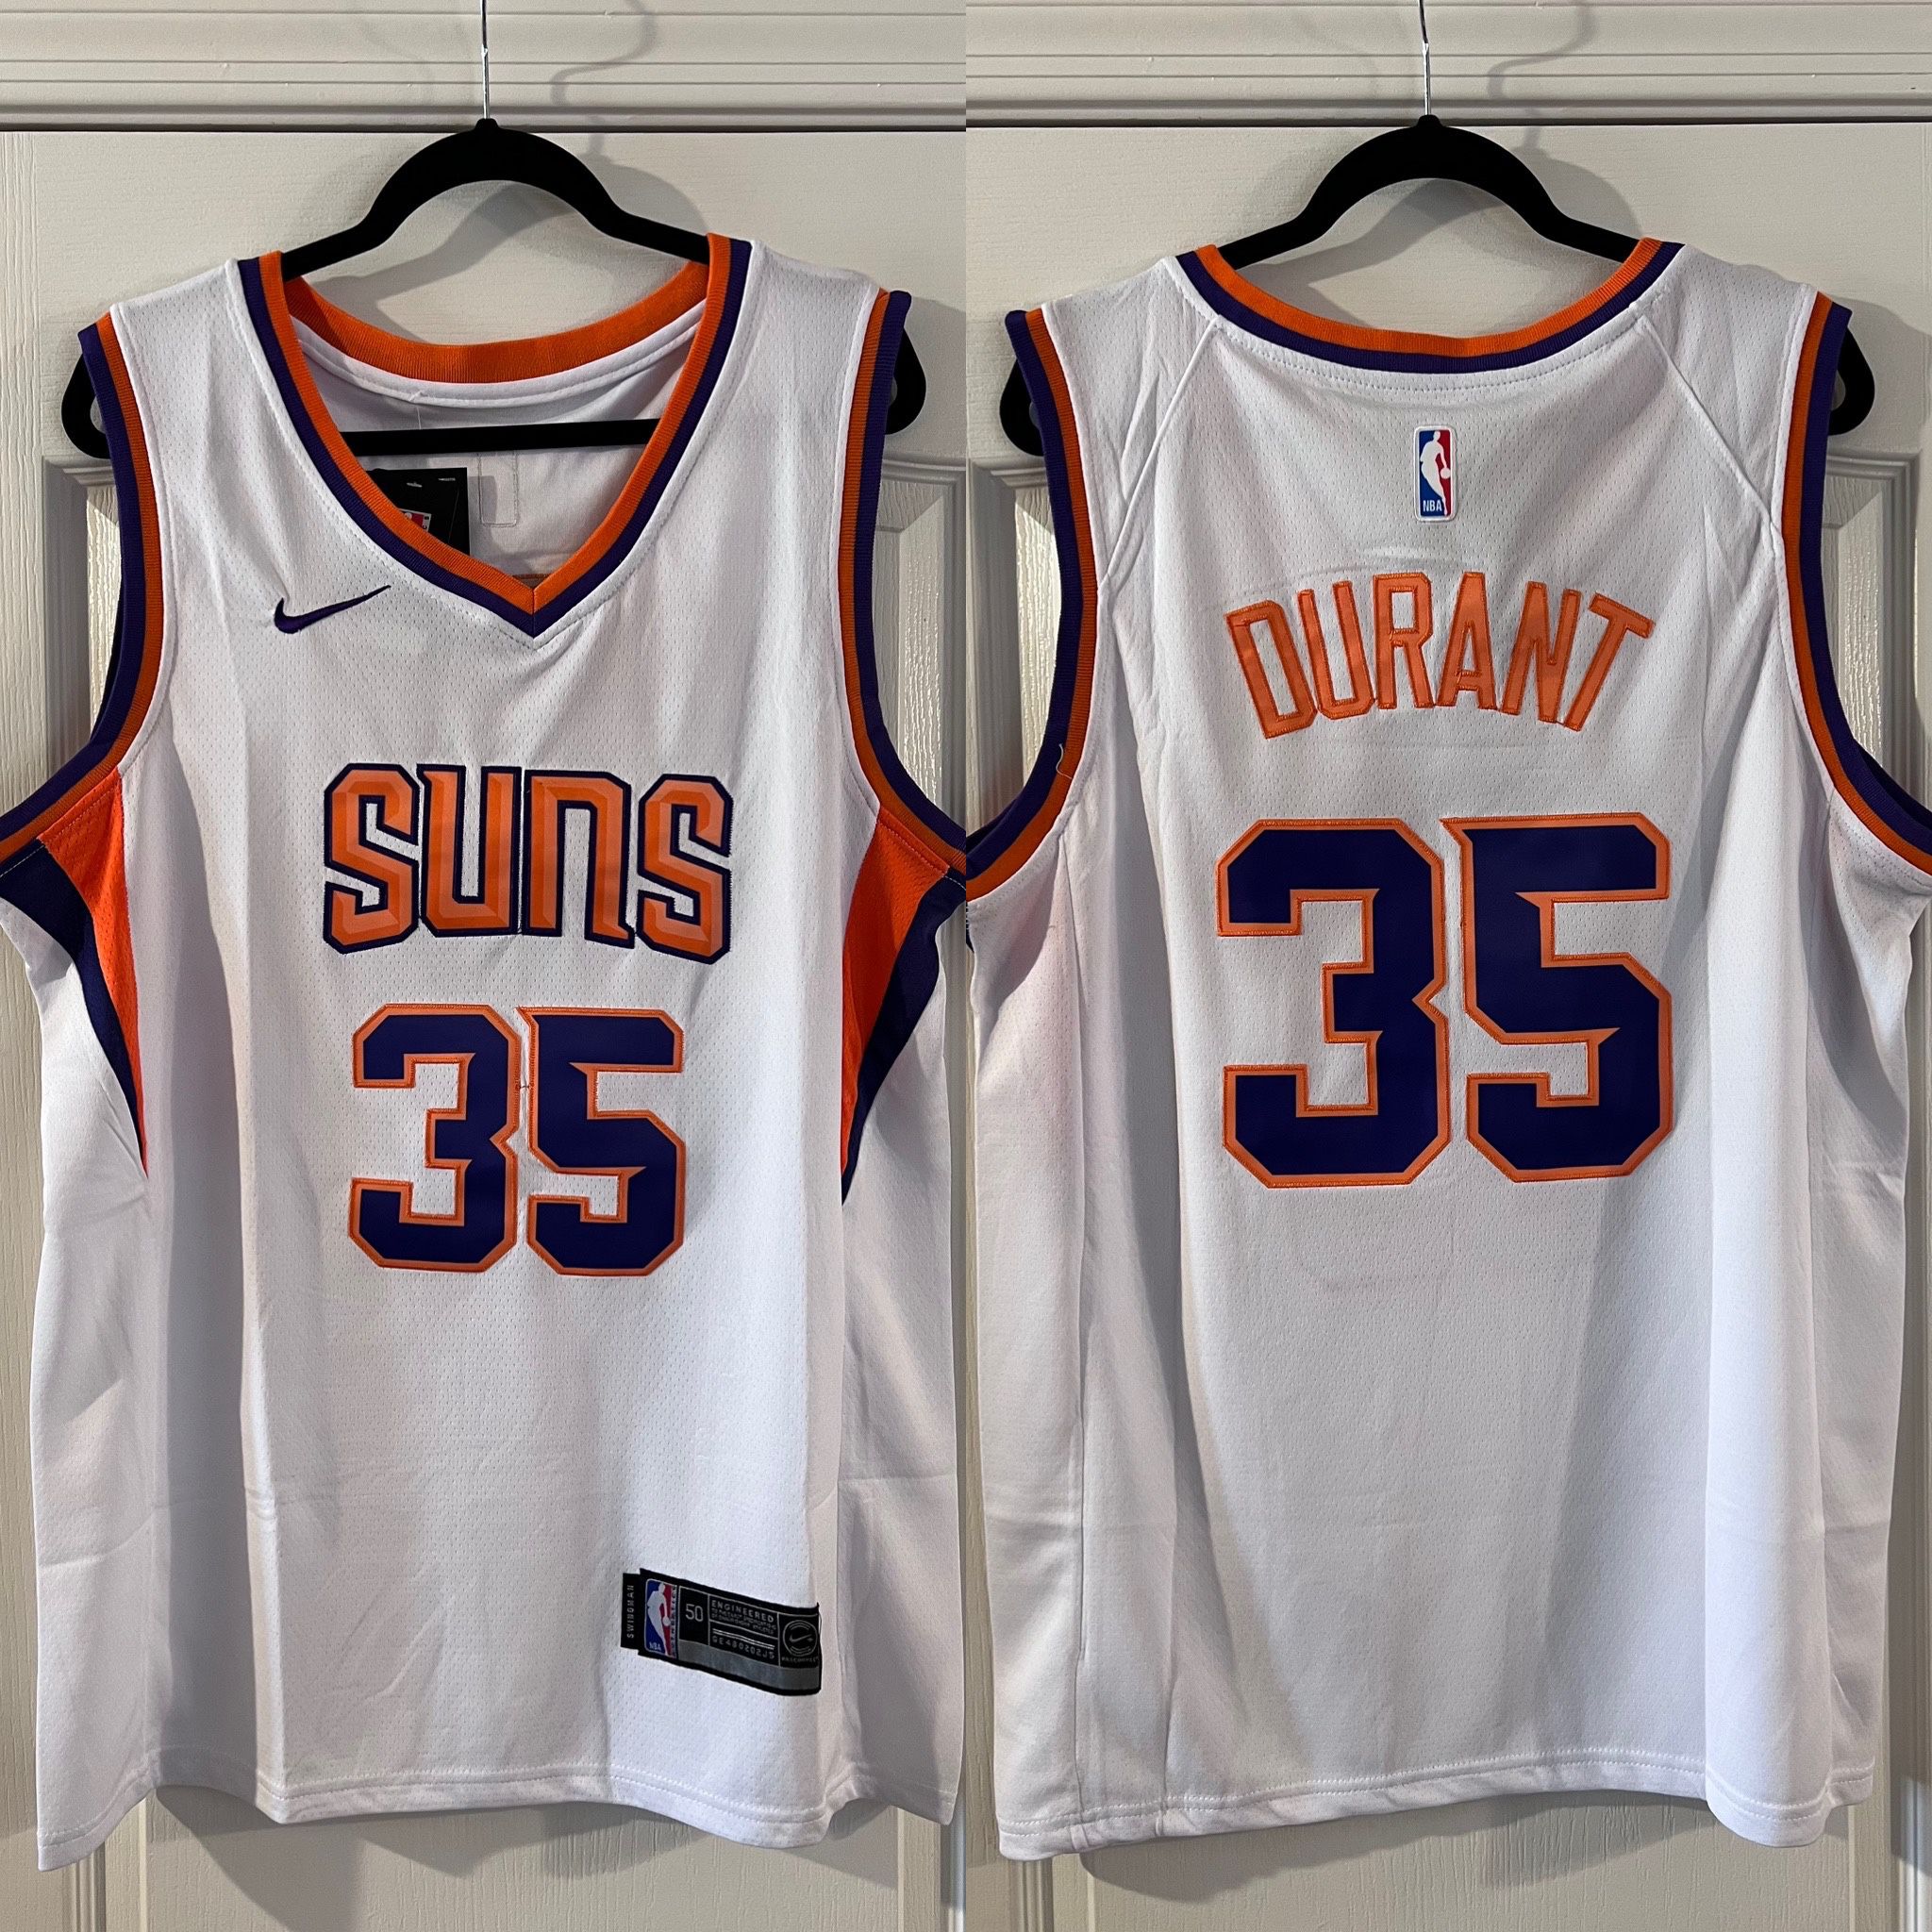 🏀 #35 Kevin Durant Phoenix Suns Nike Jerseys Adult Sizes Small-2XL 🏀